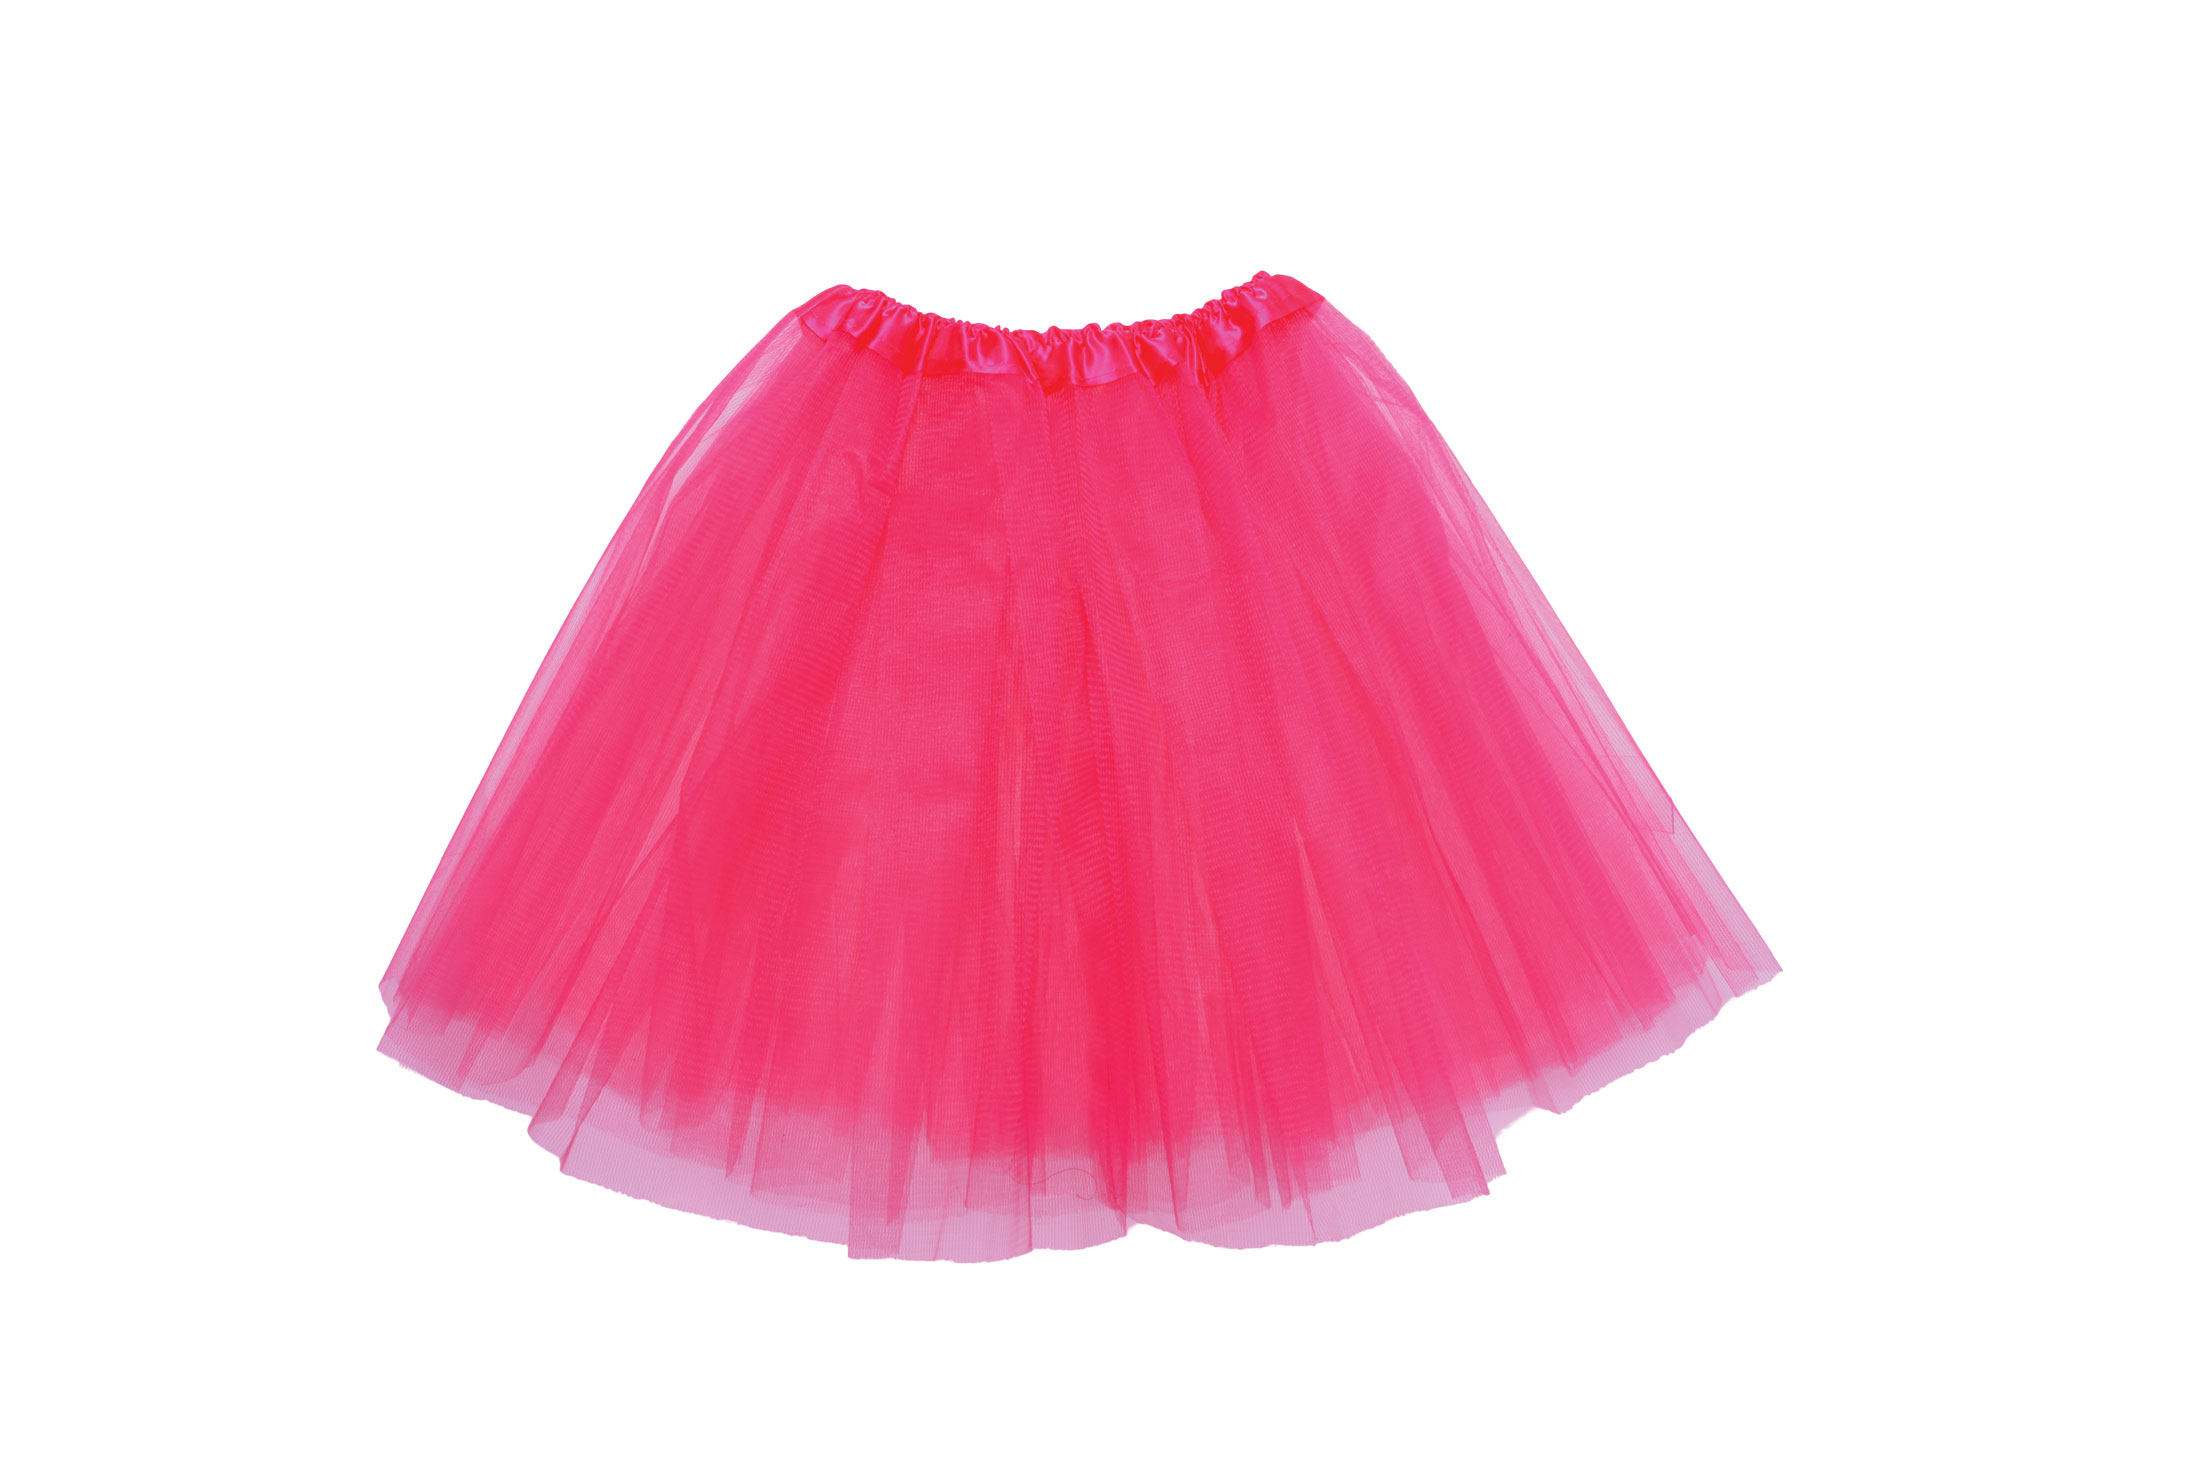 Adult Neon Pink Tutu | $14.99 | The Costume Land